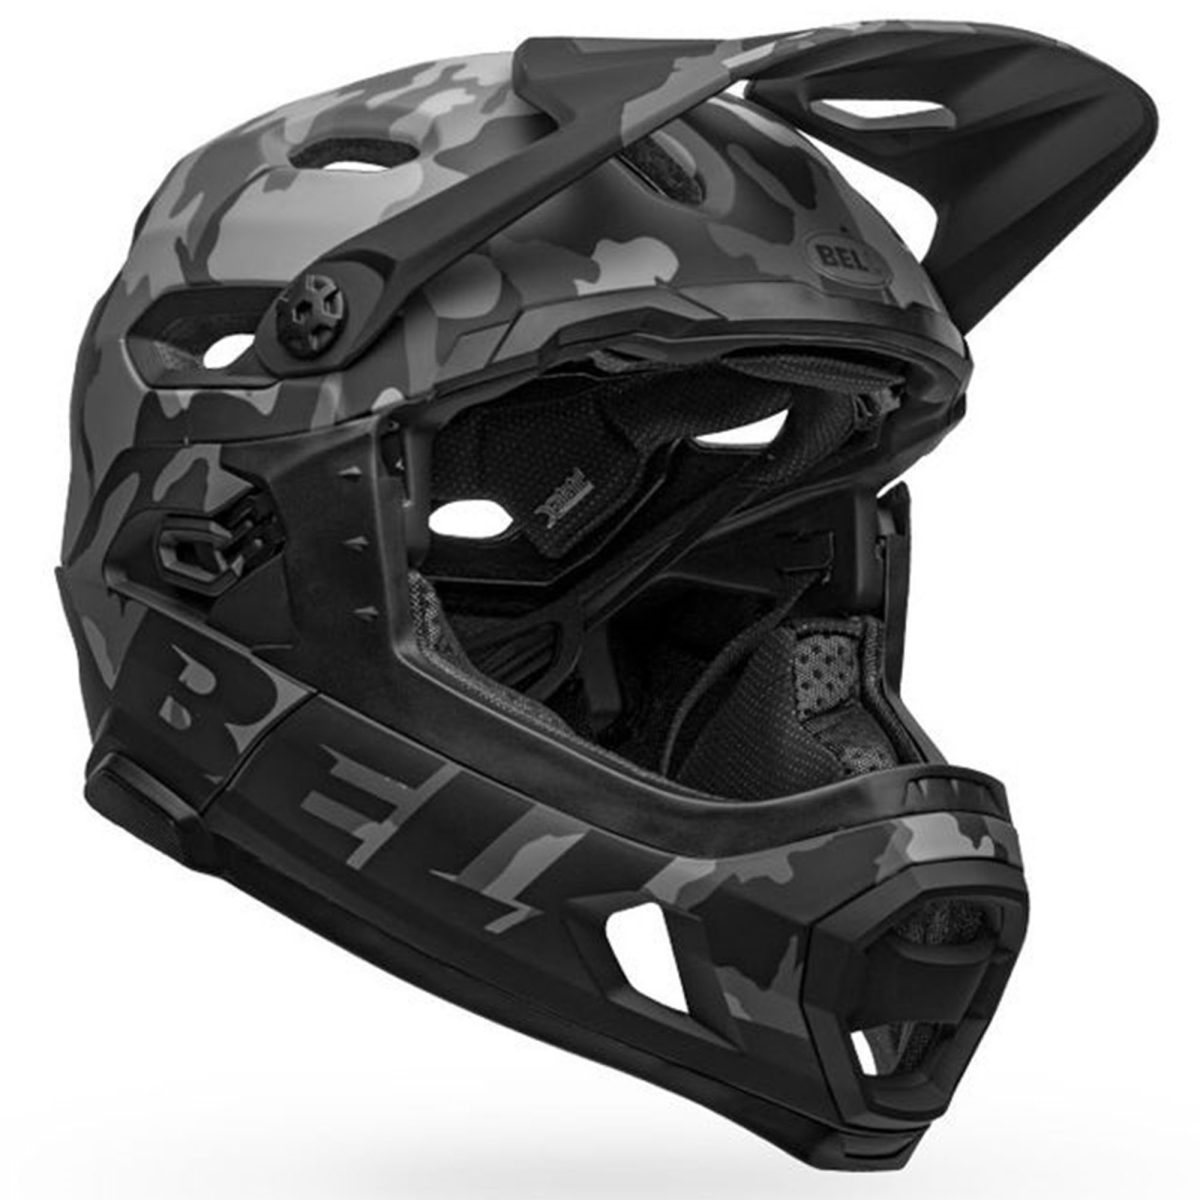 Bell Men's Super DH MIPS Mountain Bike Helmet